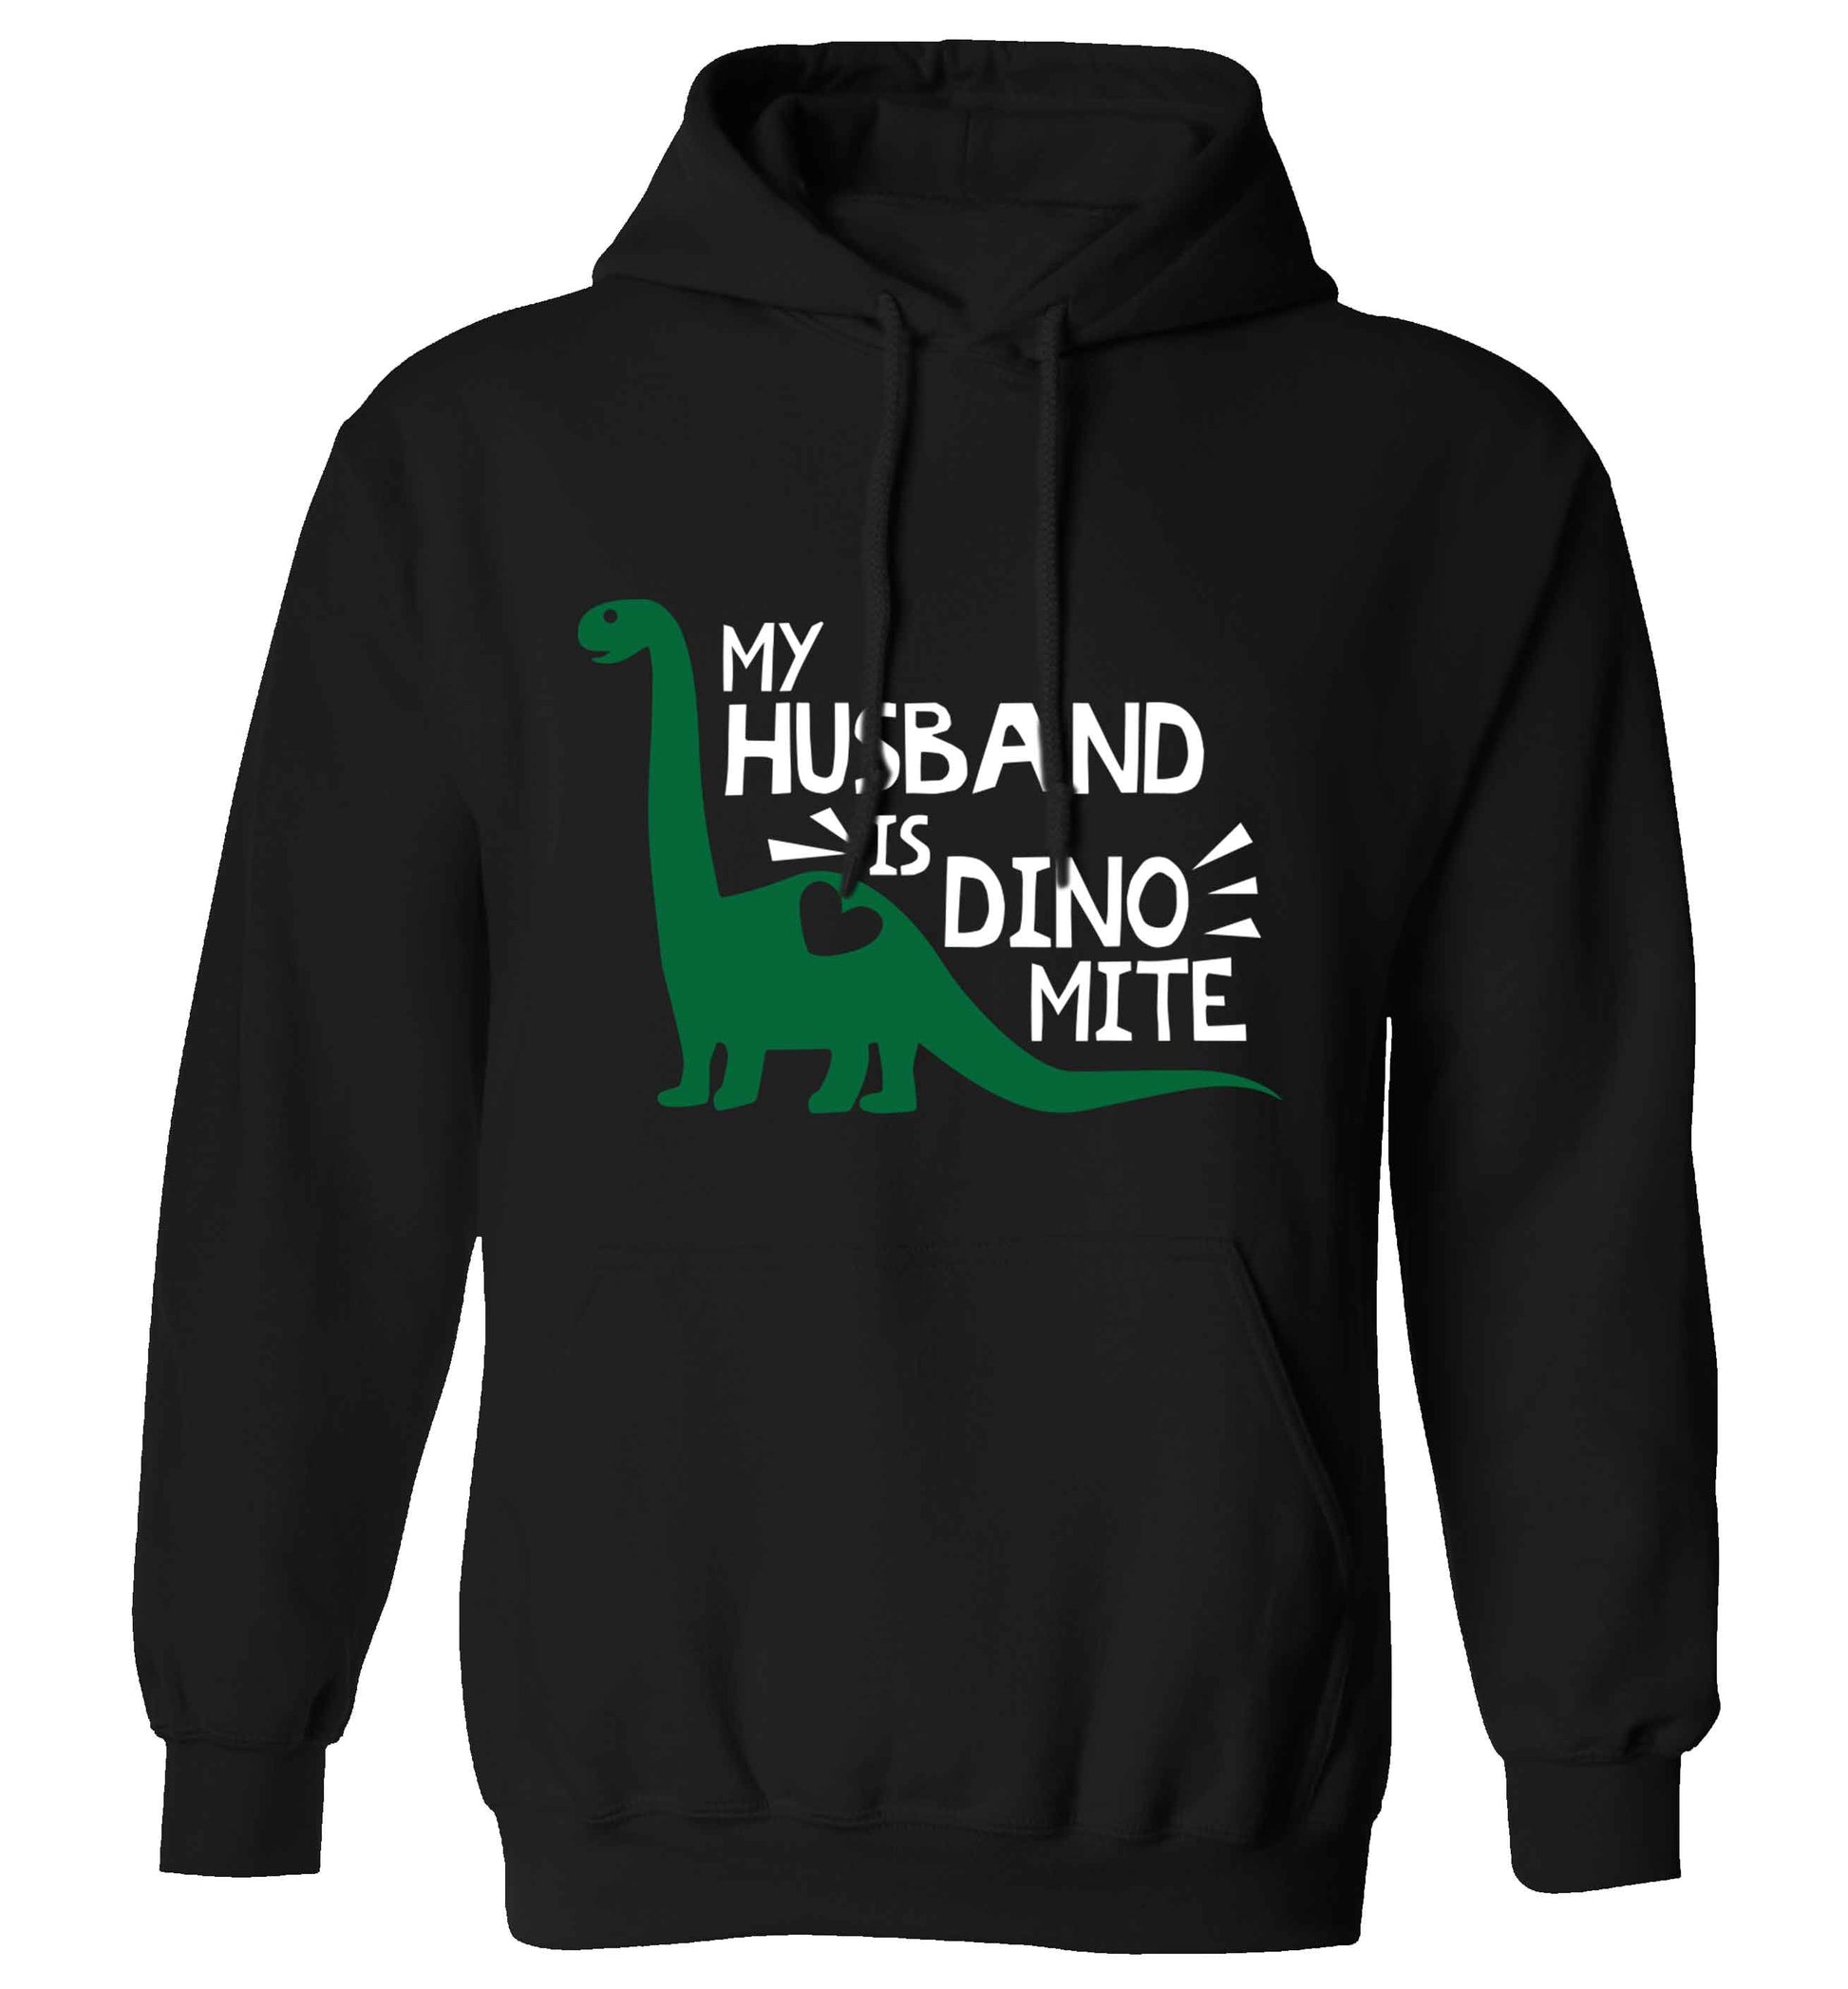 My husband is dinomite! adults unisex black hoodie 2XL